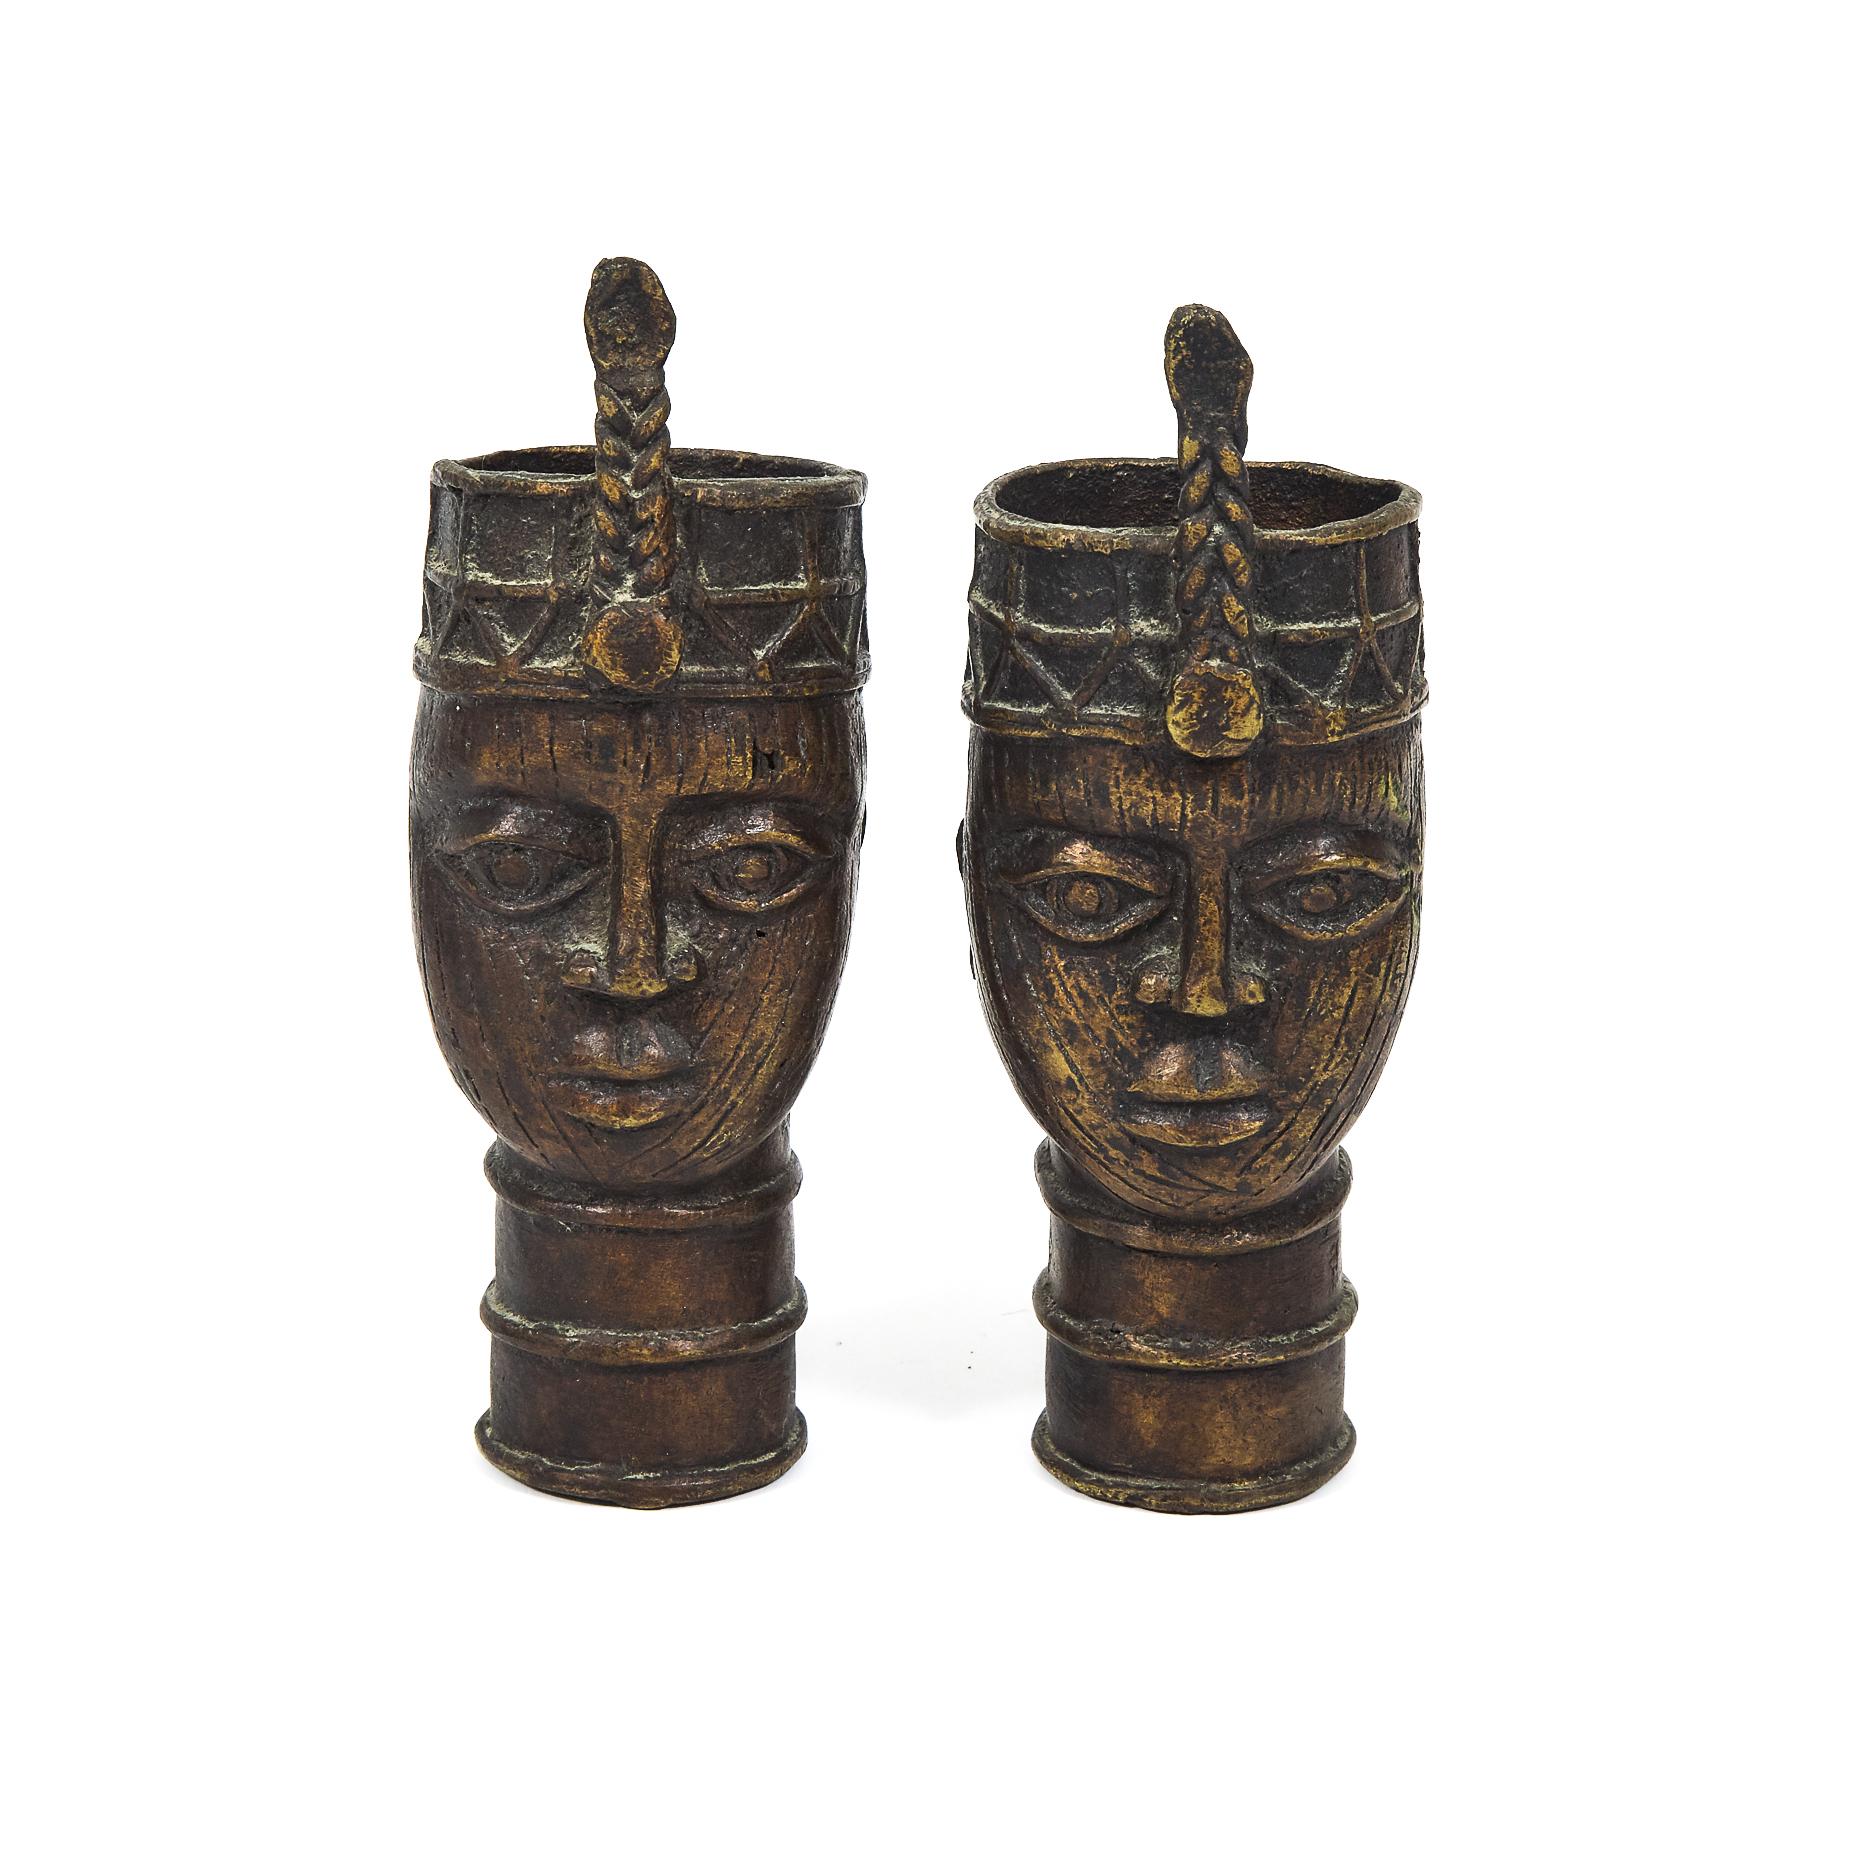 Pair of Benin Bronze Heads, Nigeria, West Africa